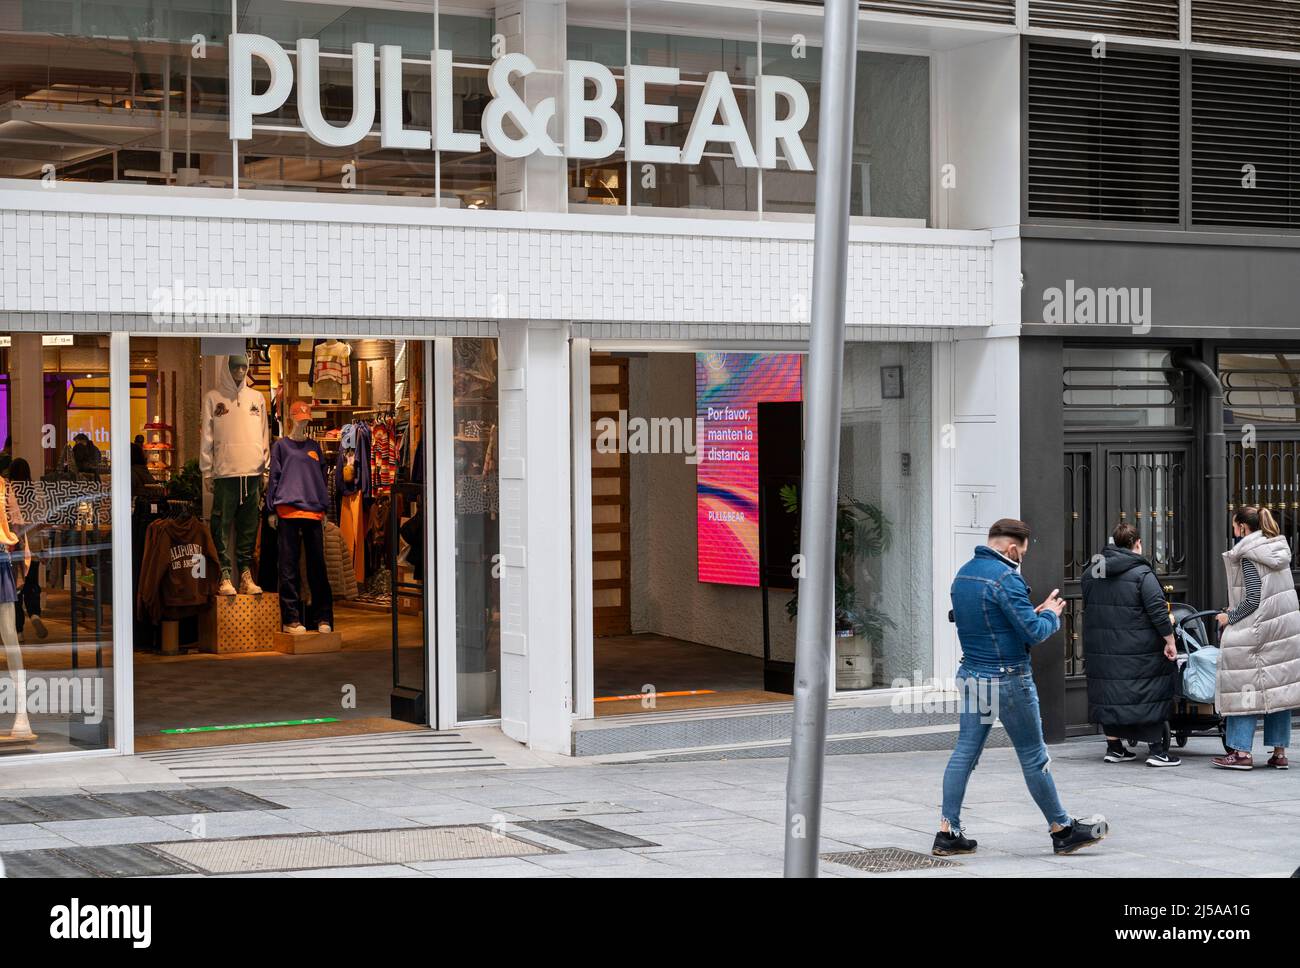 Pull bear store shop spain fotografías e imágenes de alta resolución - Alamy